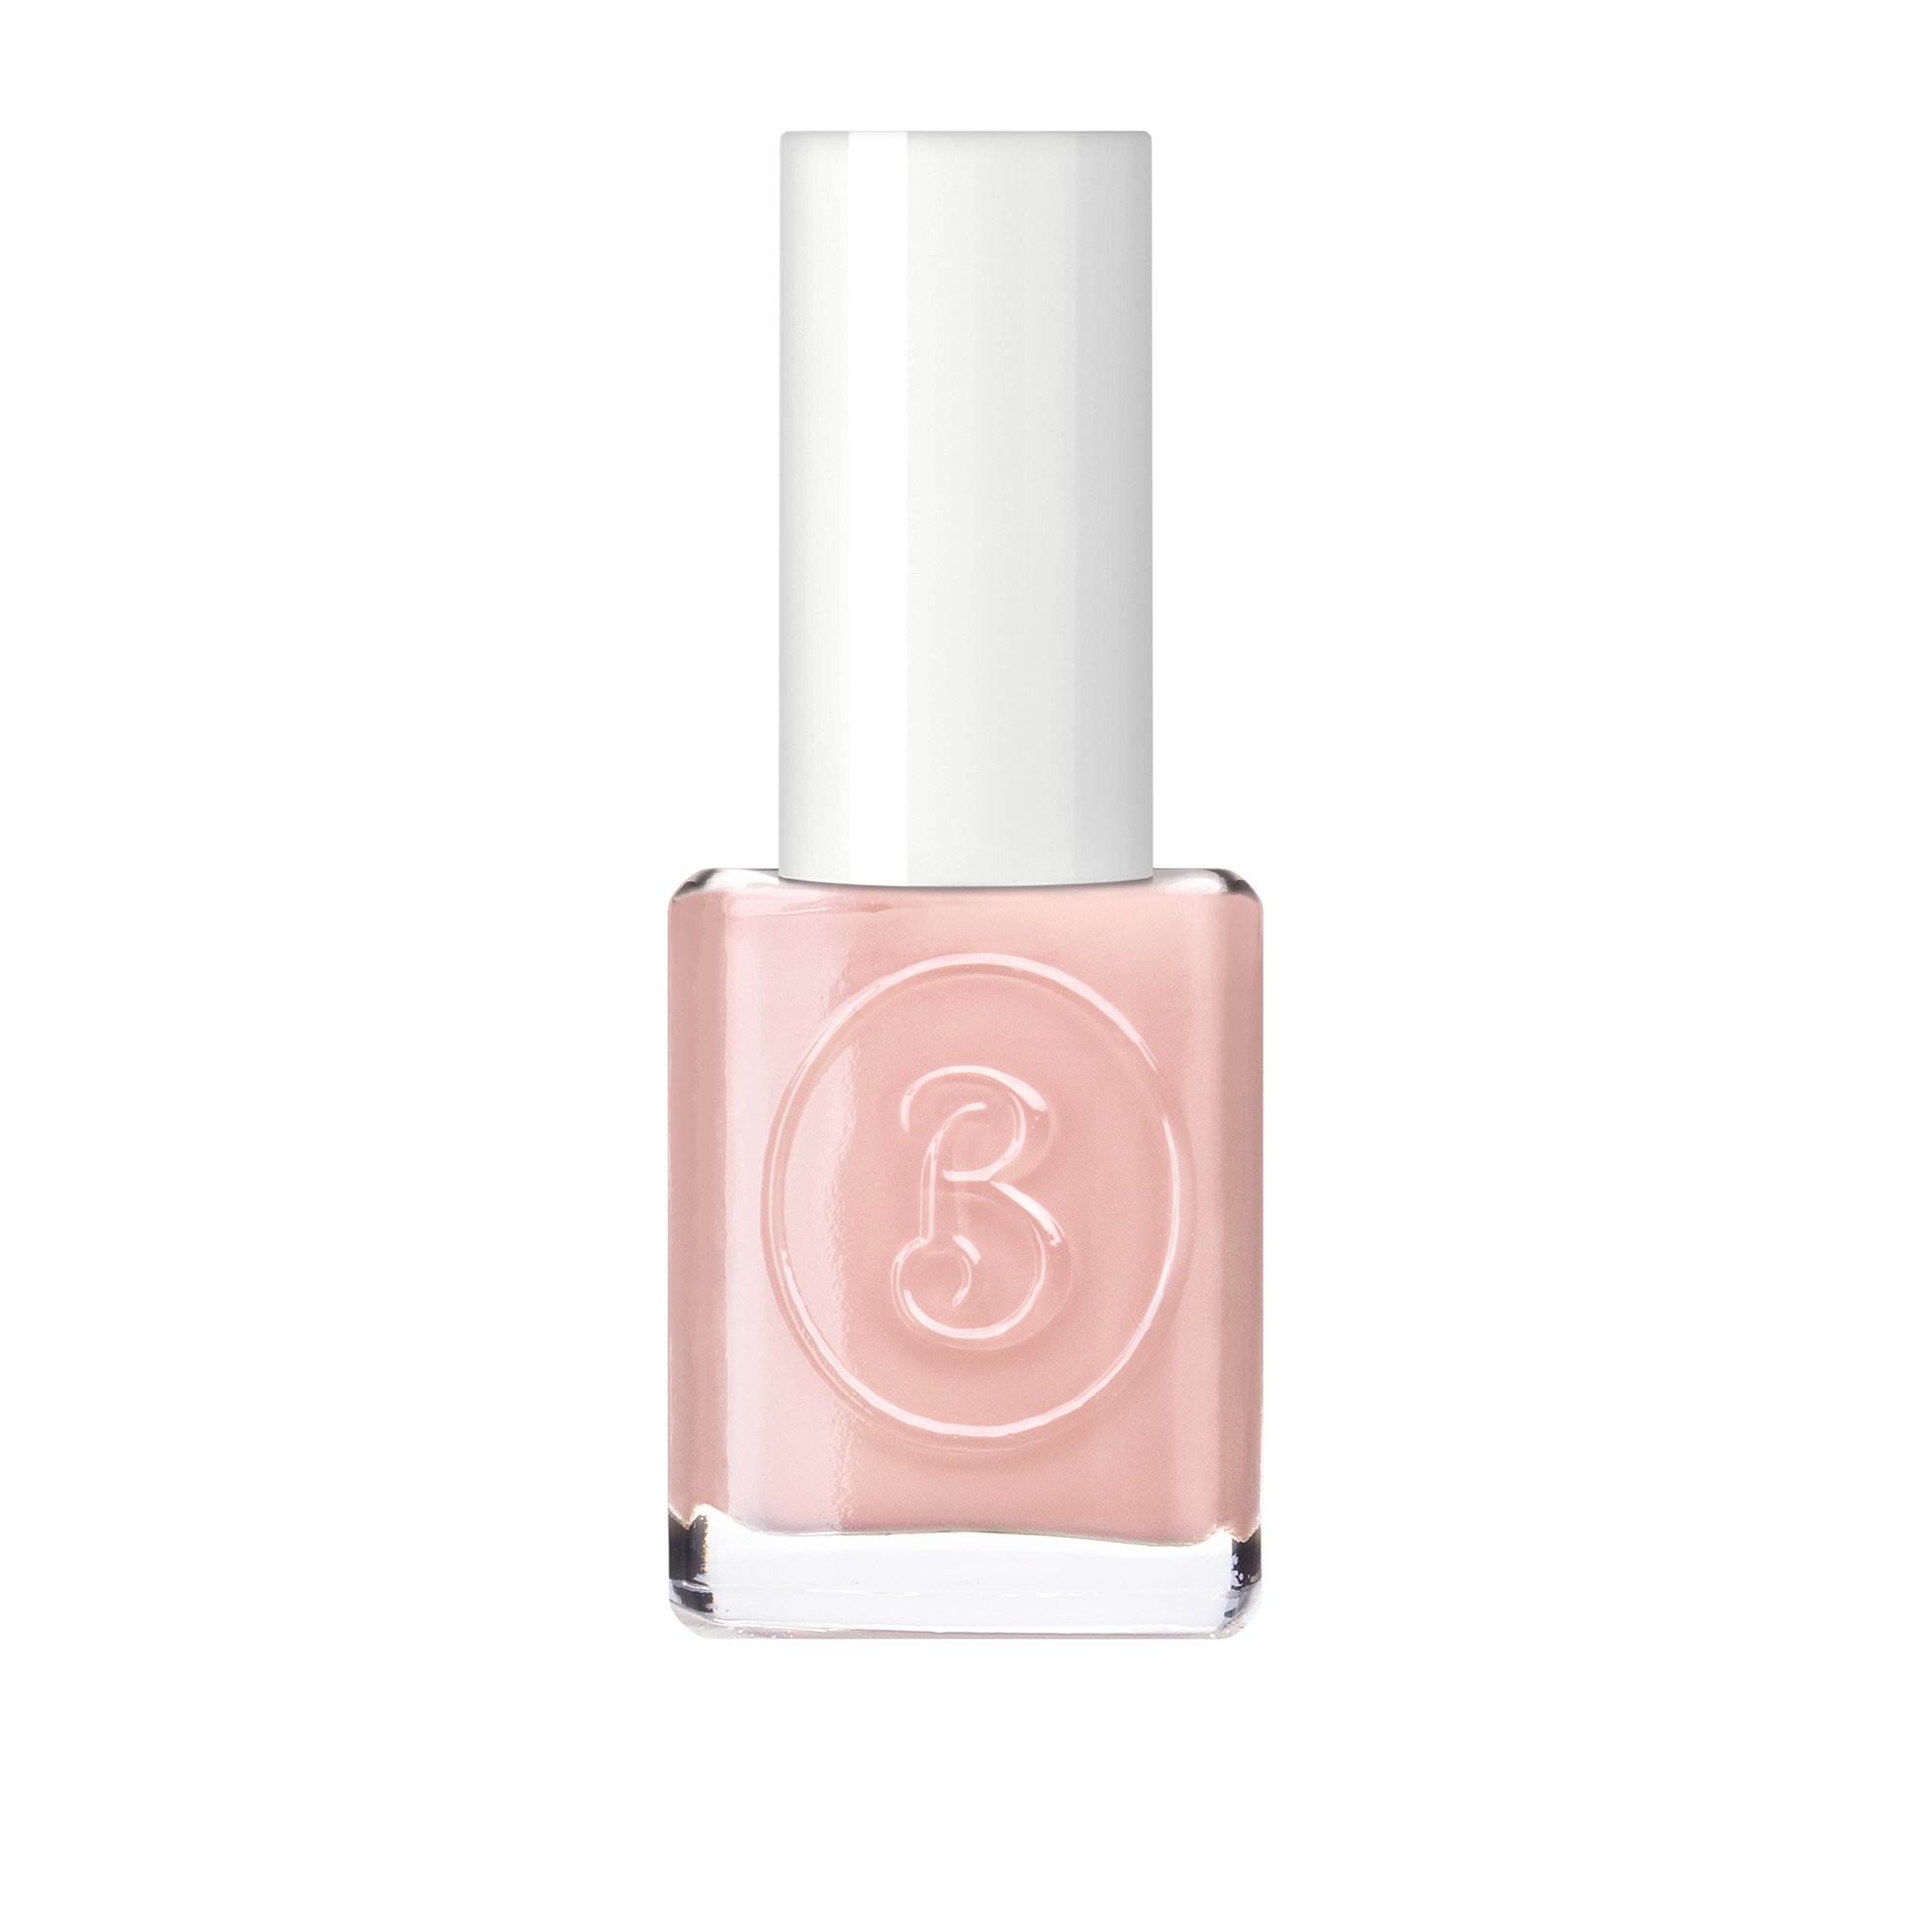 BERENICE 02 лак для ногтей, бледно-розовый / Pale pink 16 мл